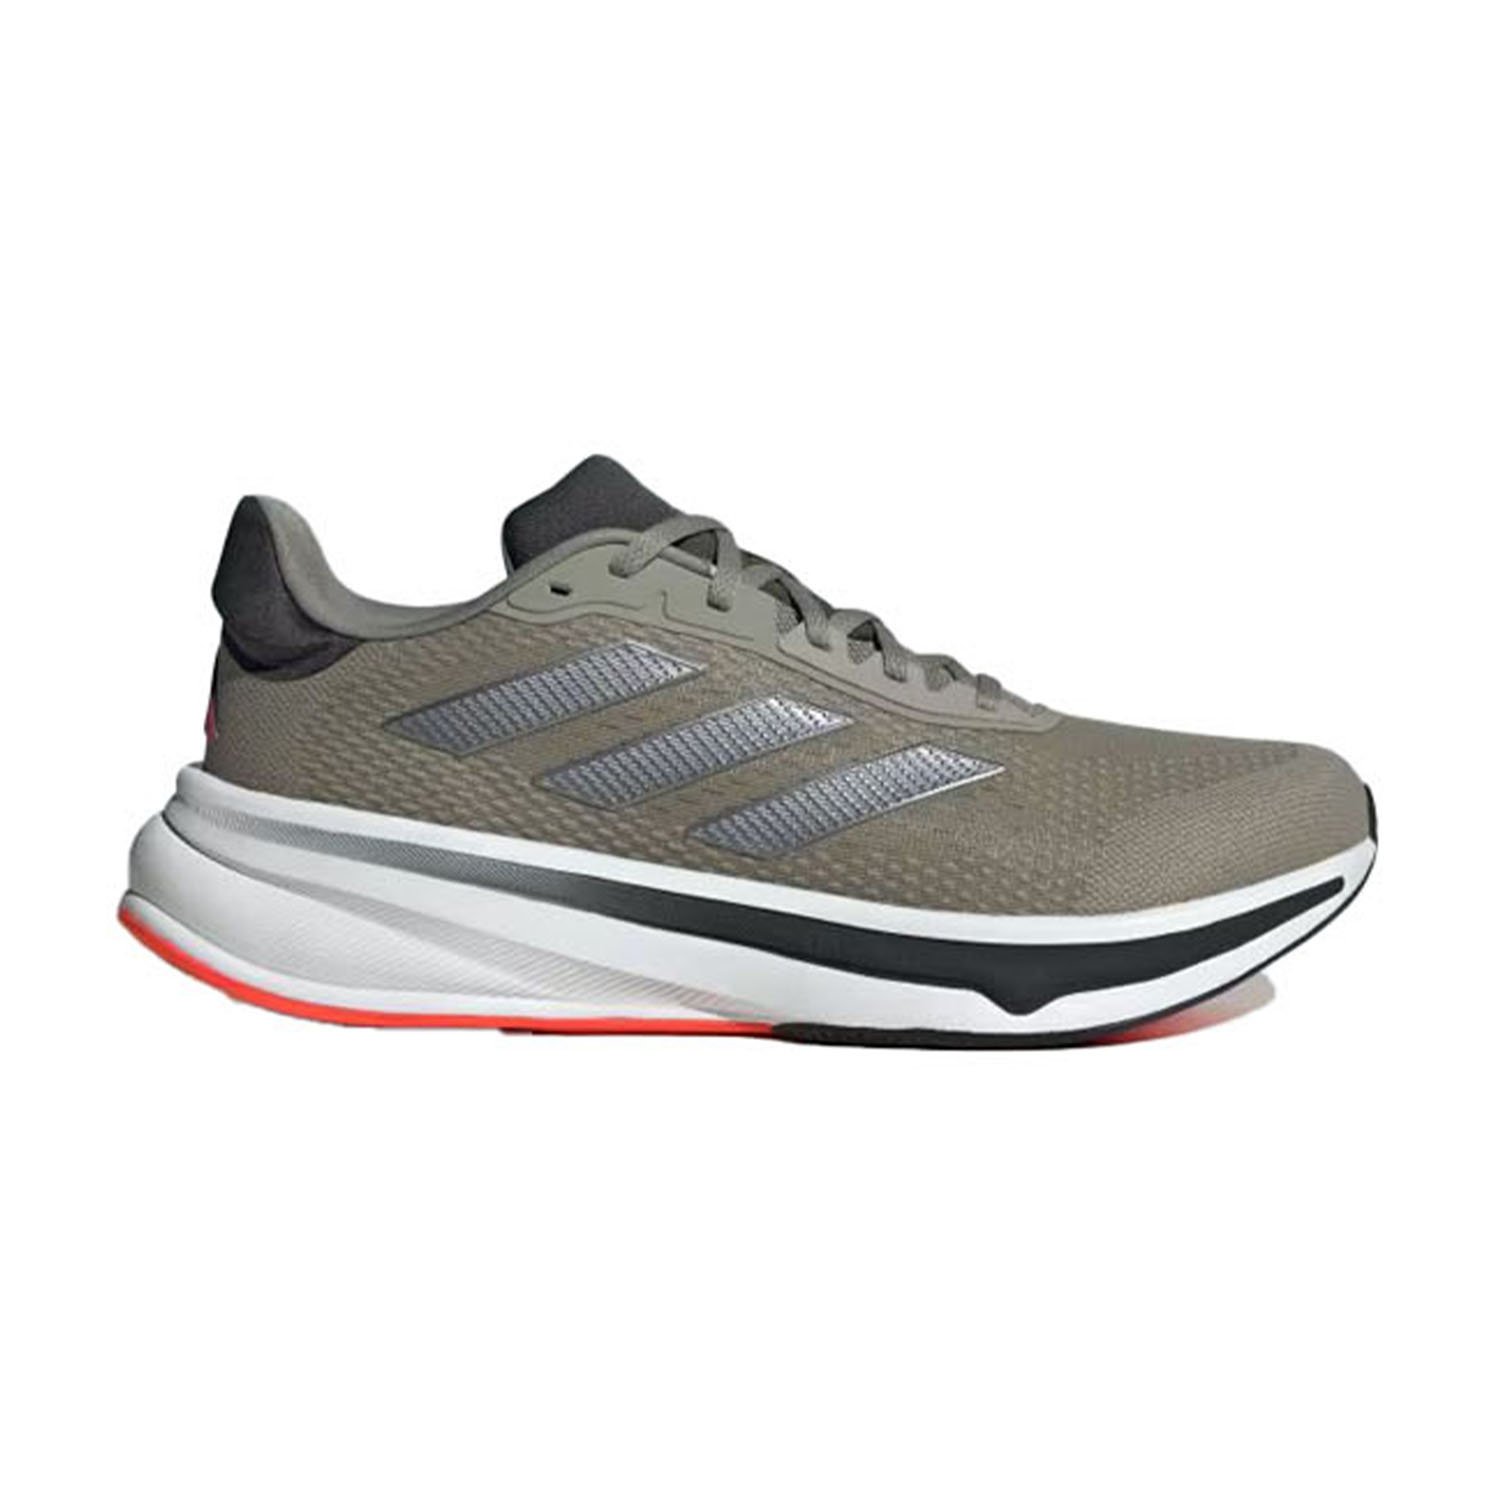 Adidas Response Super Erkek Koşu Ayakkabısı - Gri - 1